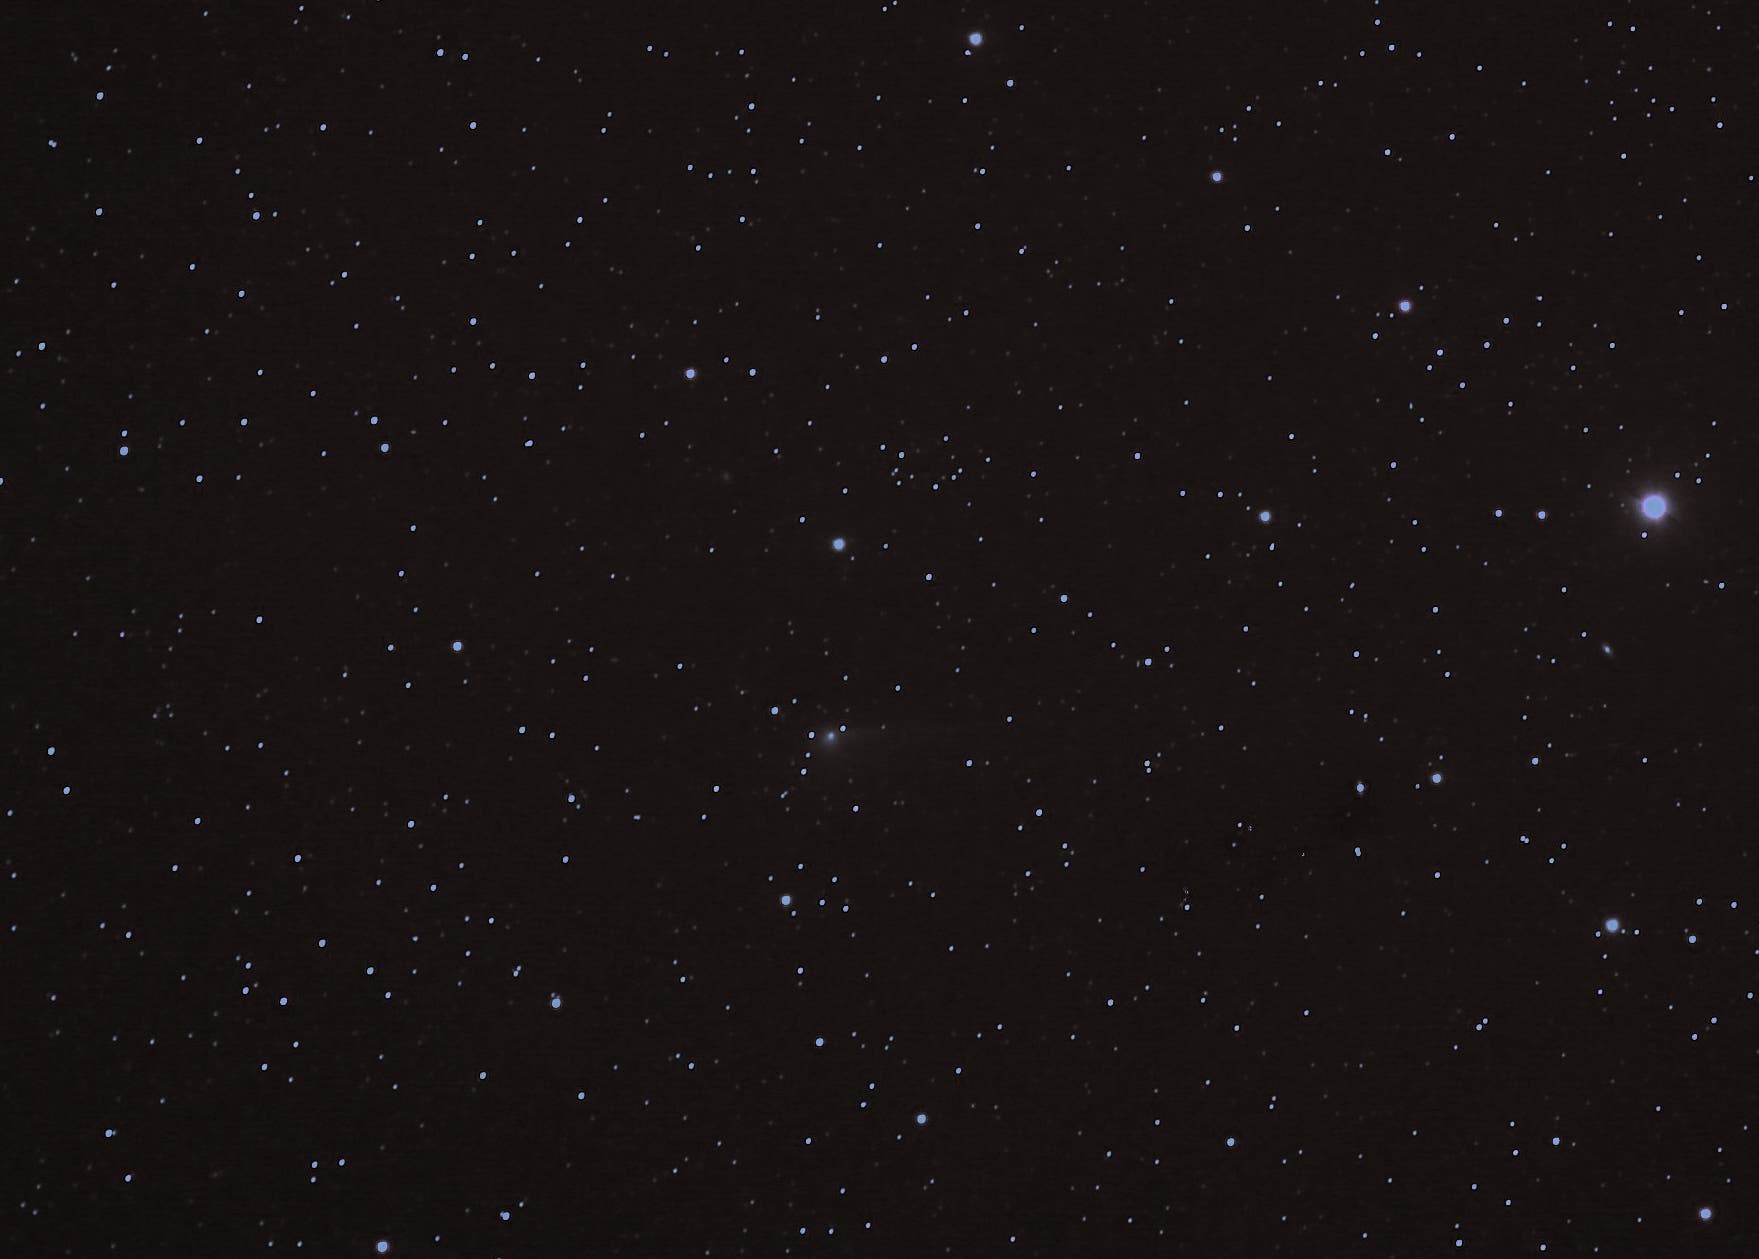 Komet 67P/Tschurjumow-Gerasimenko